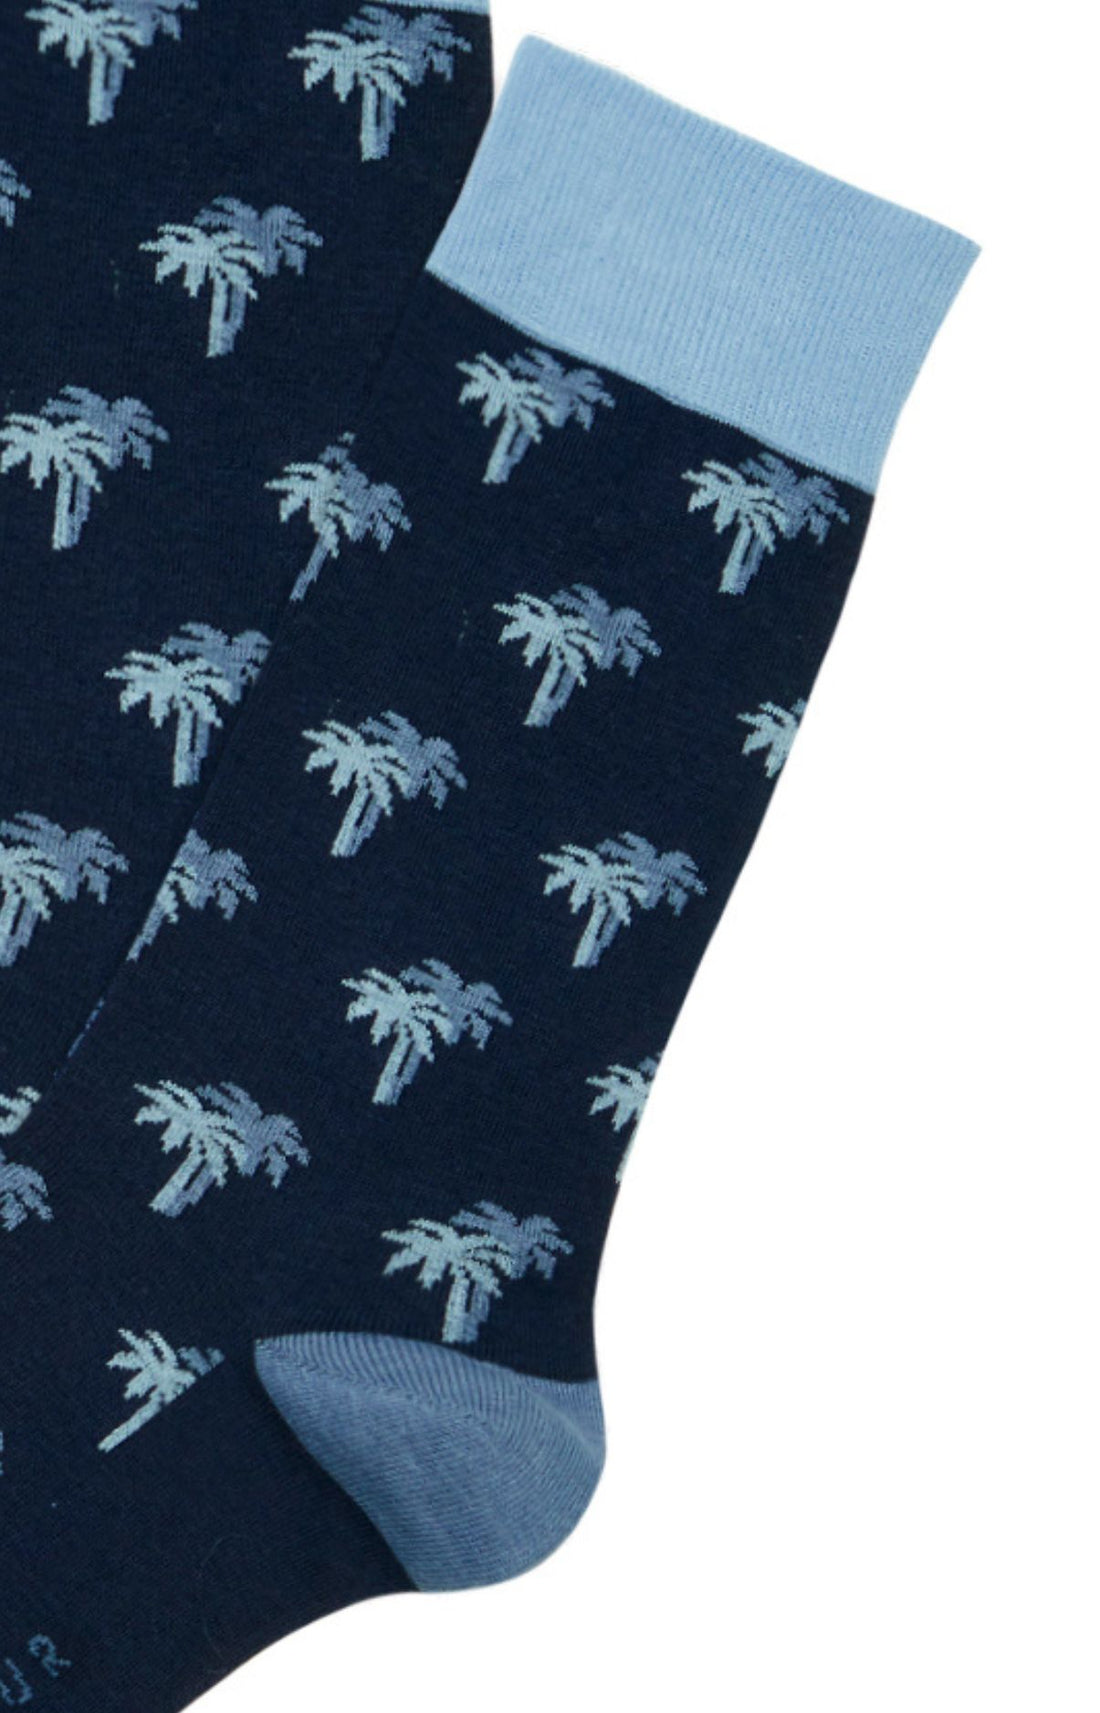 Navy Socks - Little palm tree